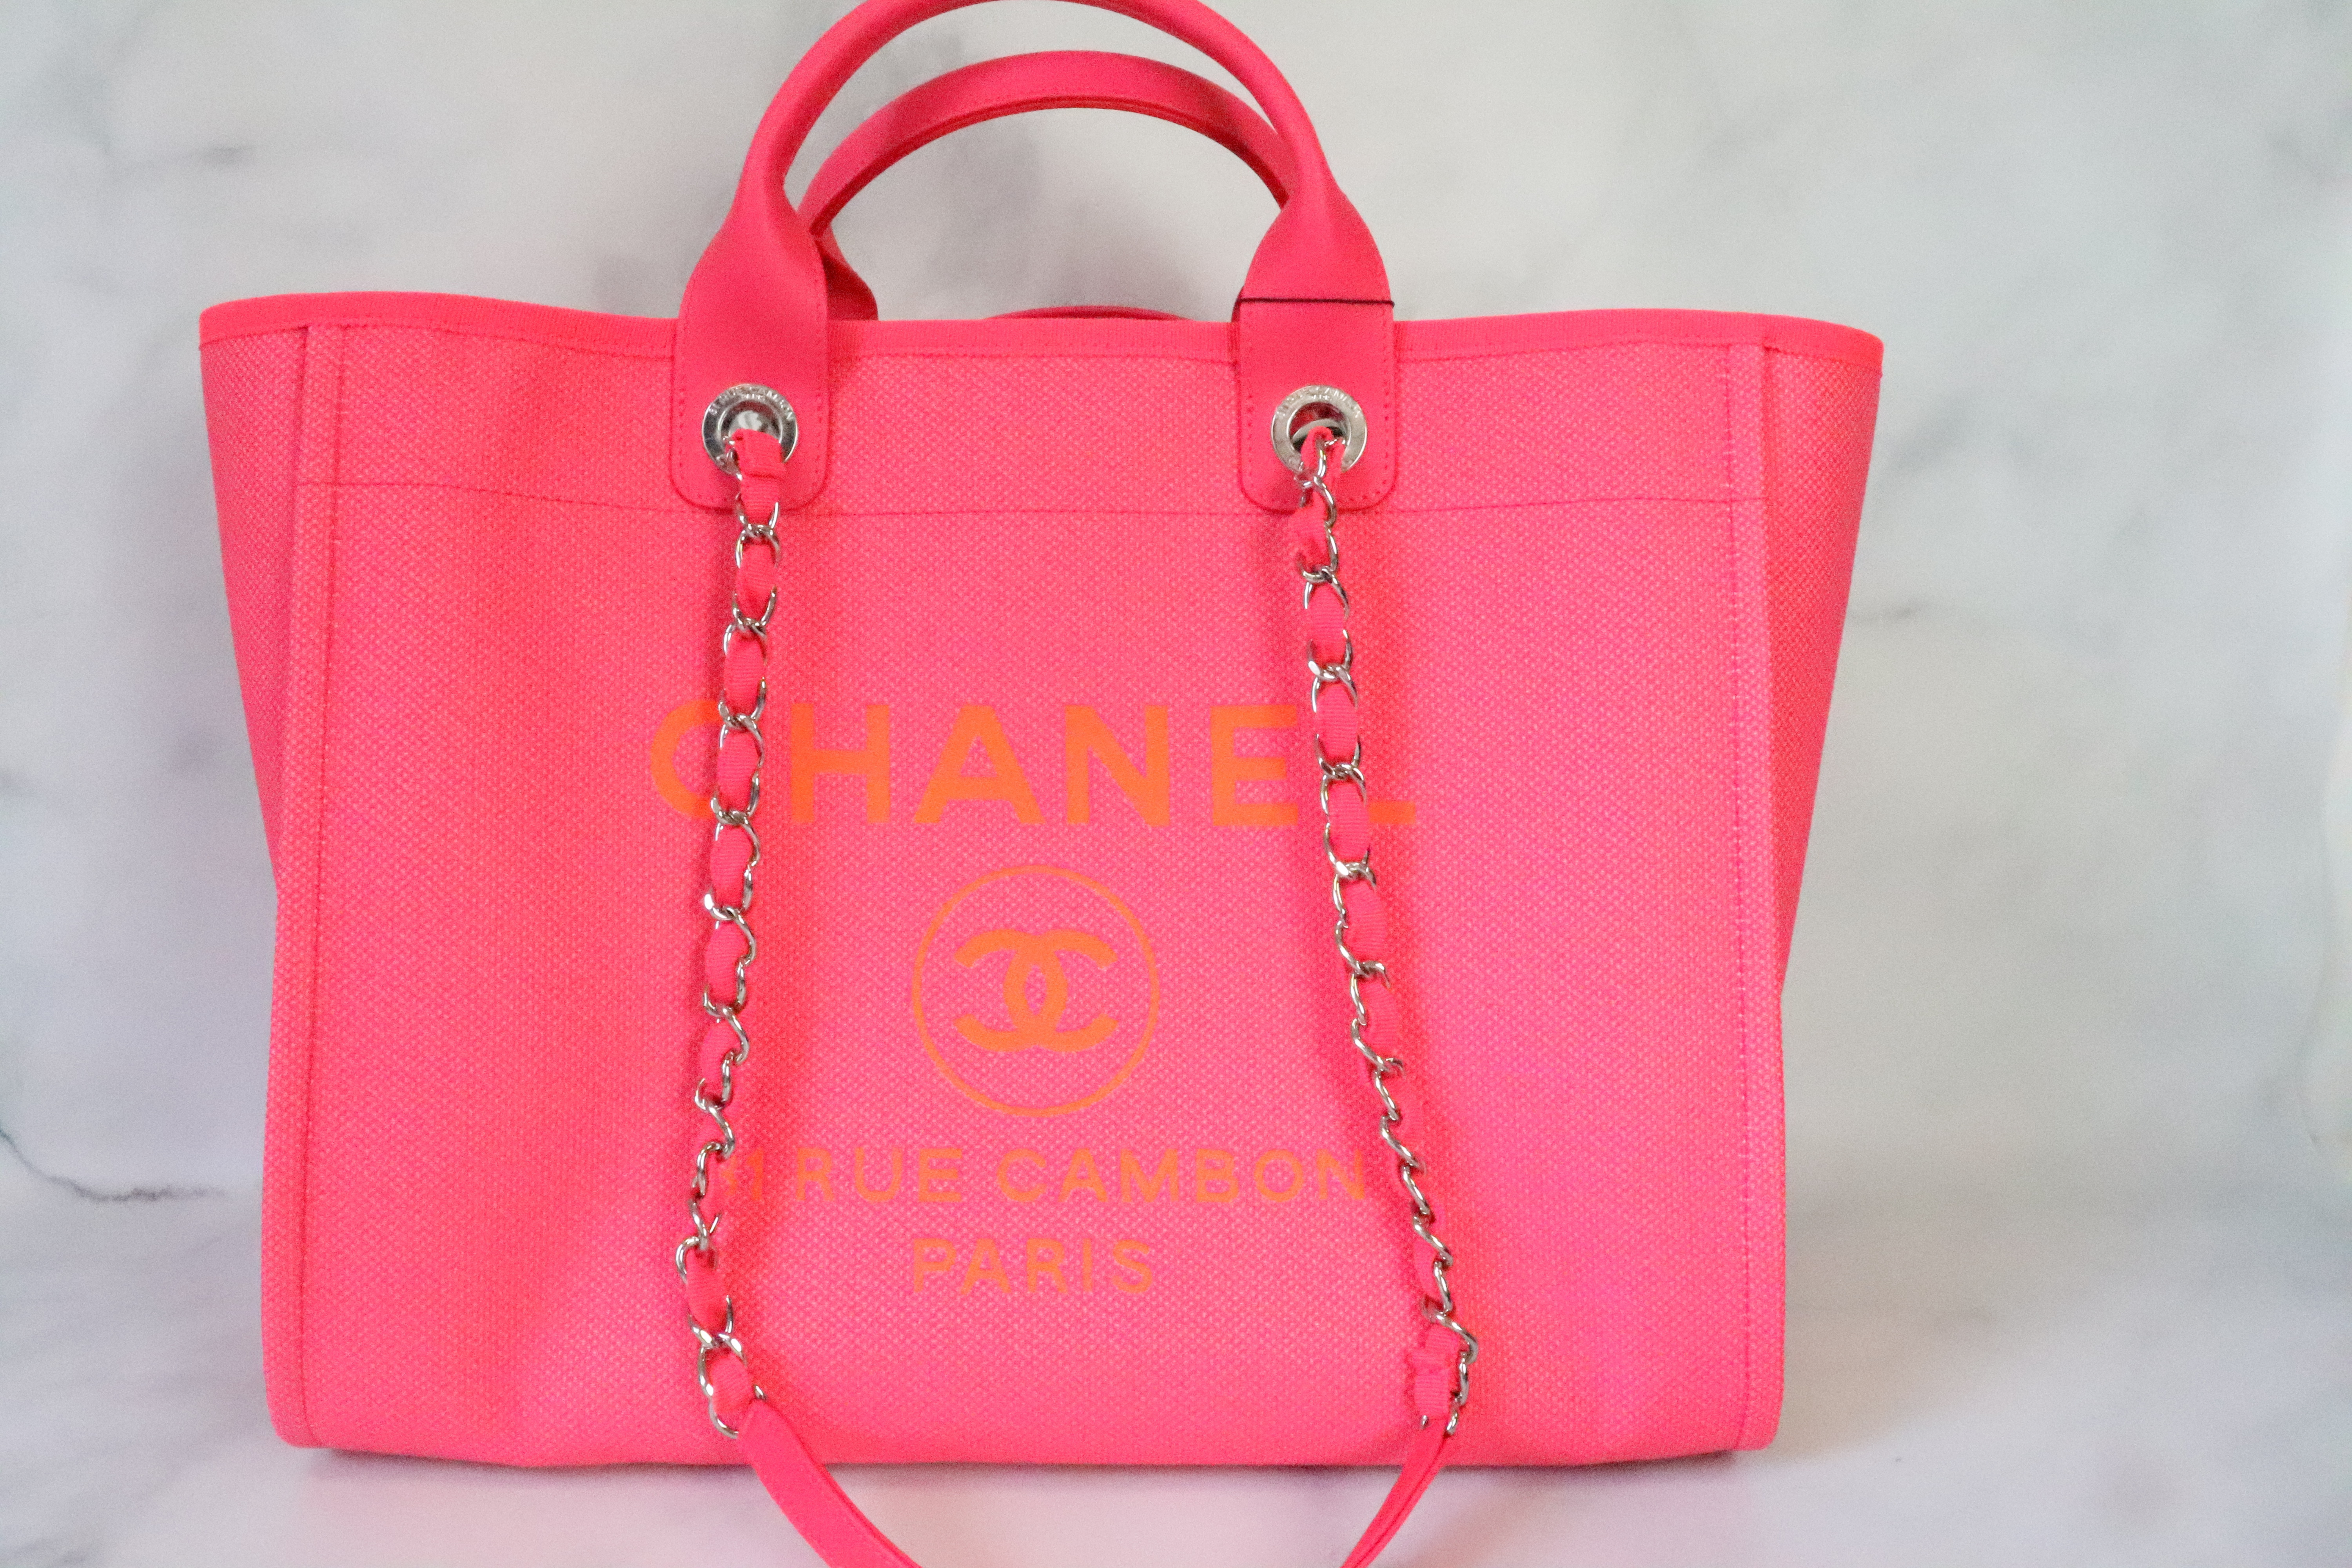 Chanel Spring Summer 2021 Classic Bag Collection Act 1  Bragmybag